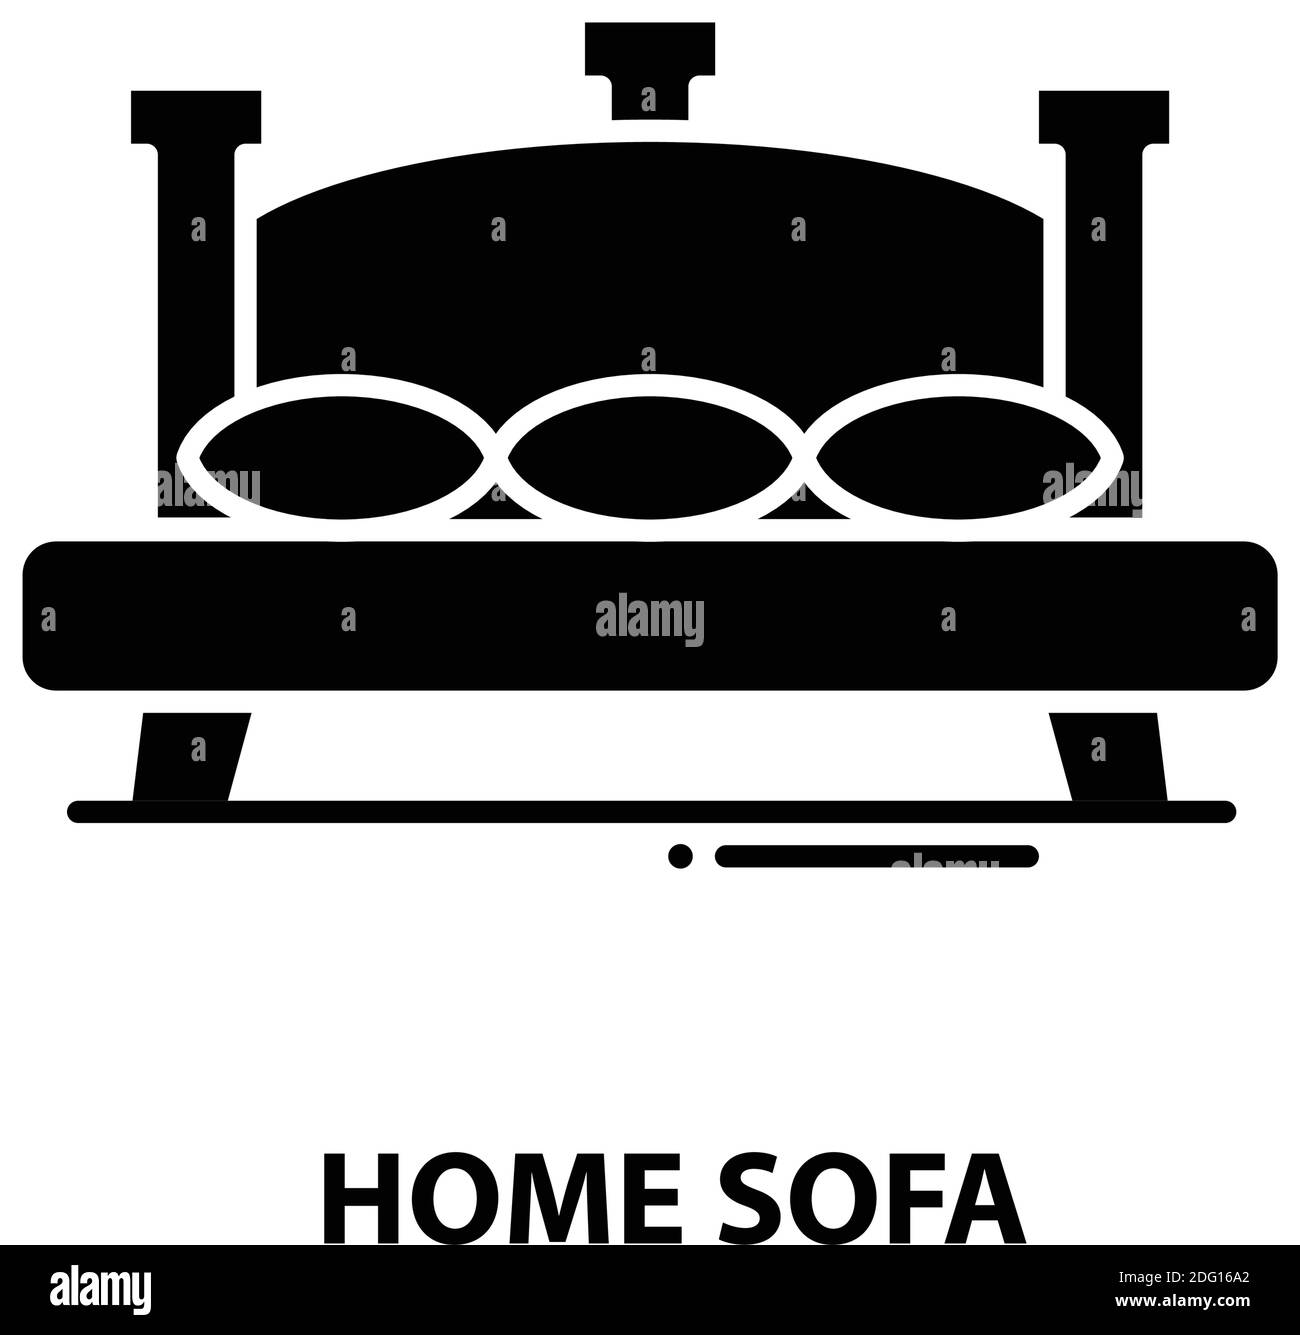 home sofa icon, black vector sign with editable strokes, concept illustration Stock Vector